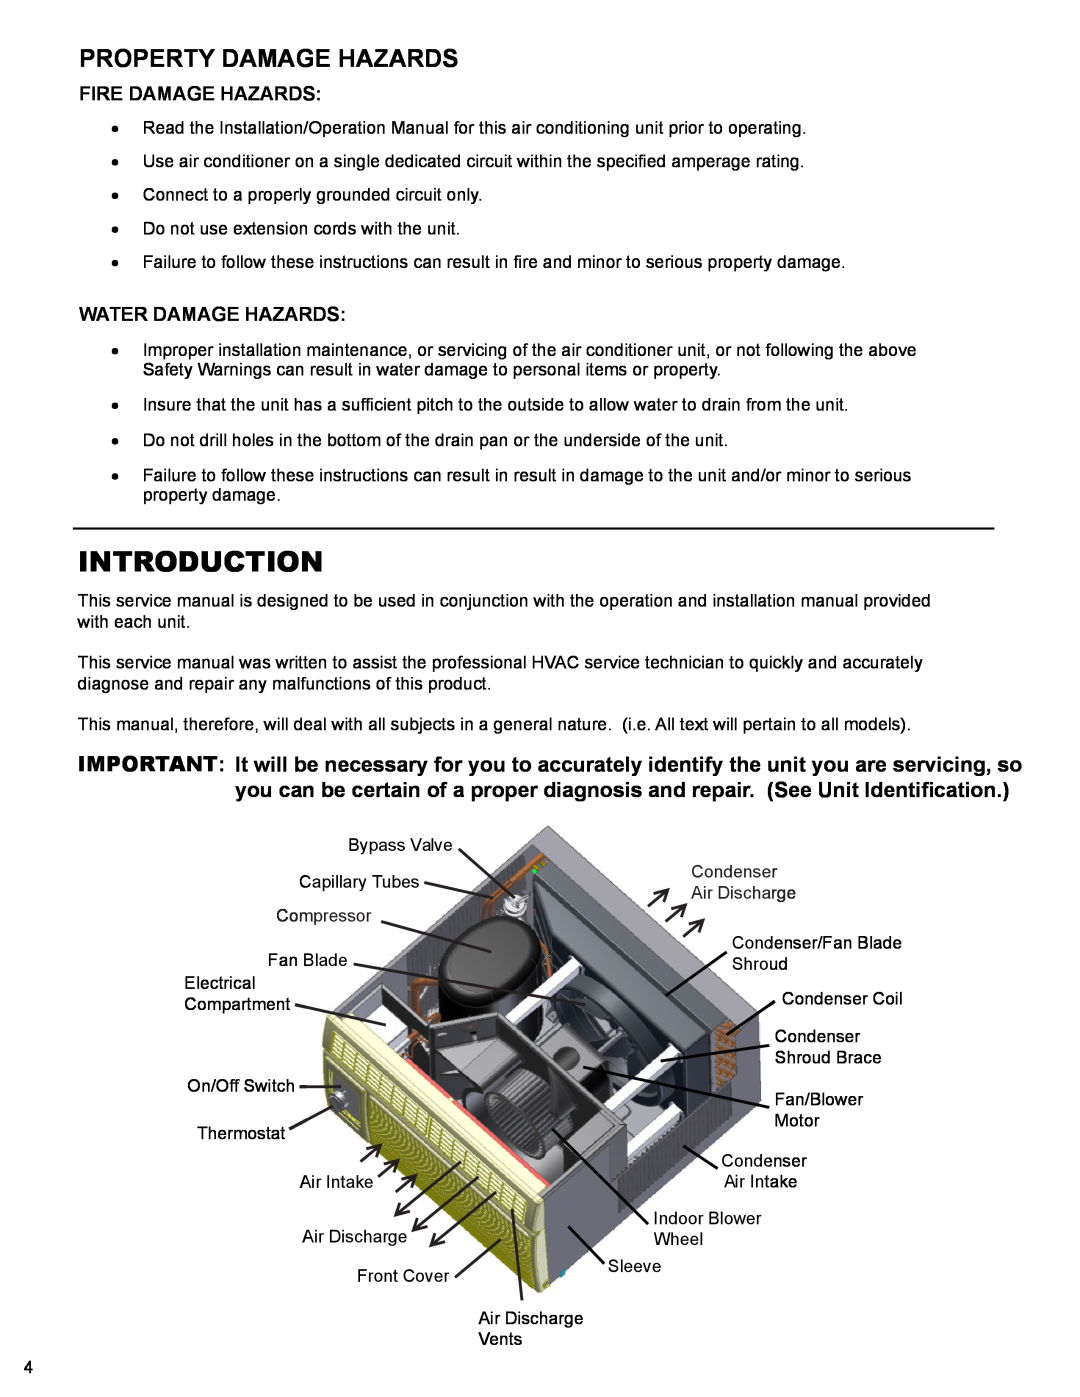 Friedrich R-410A service manual Introduction, Property Damage Hazards, Condenser, Air Discharge, Compressor 